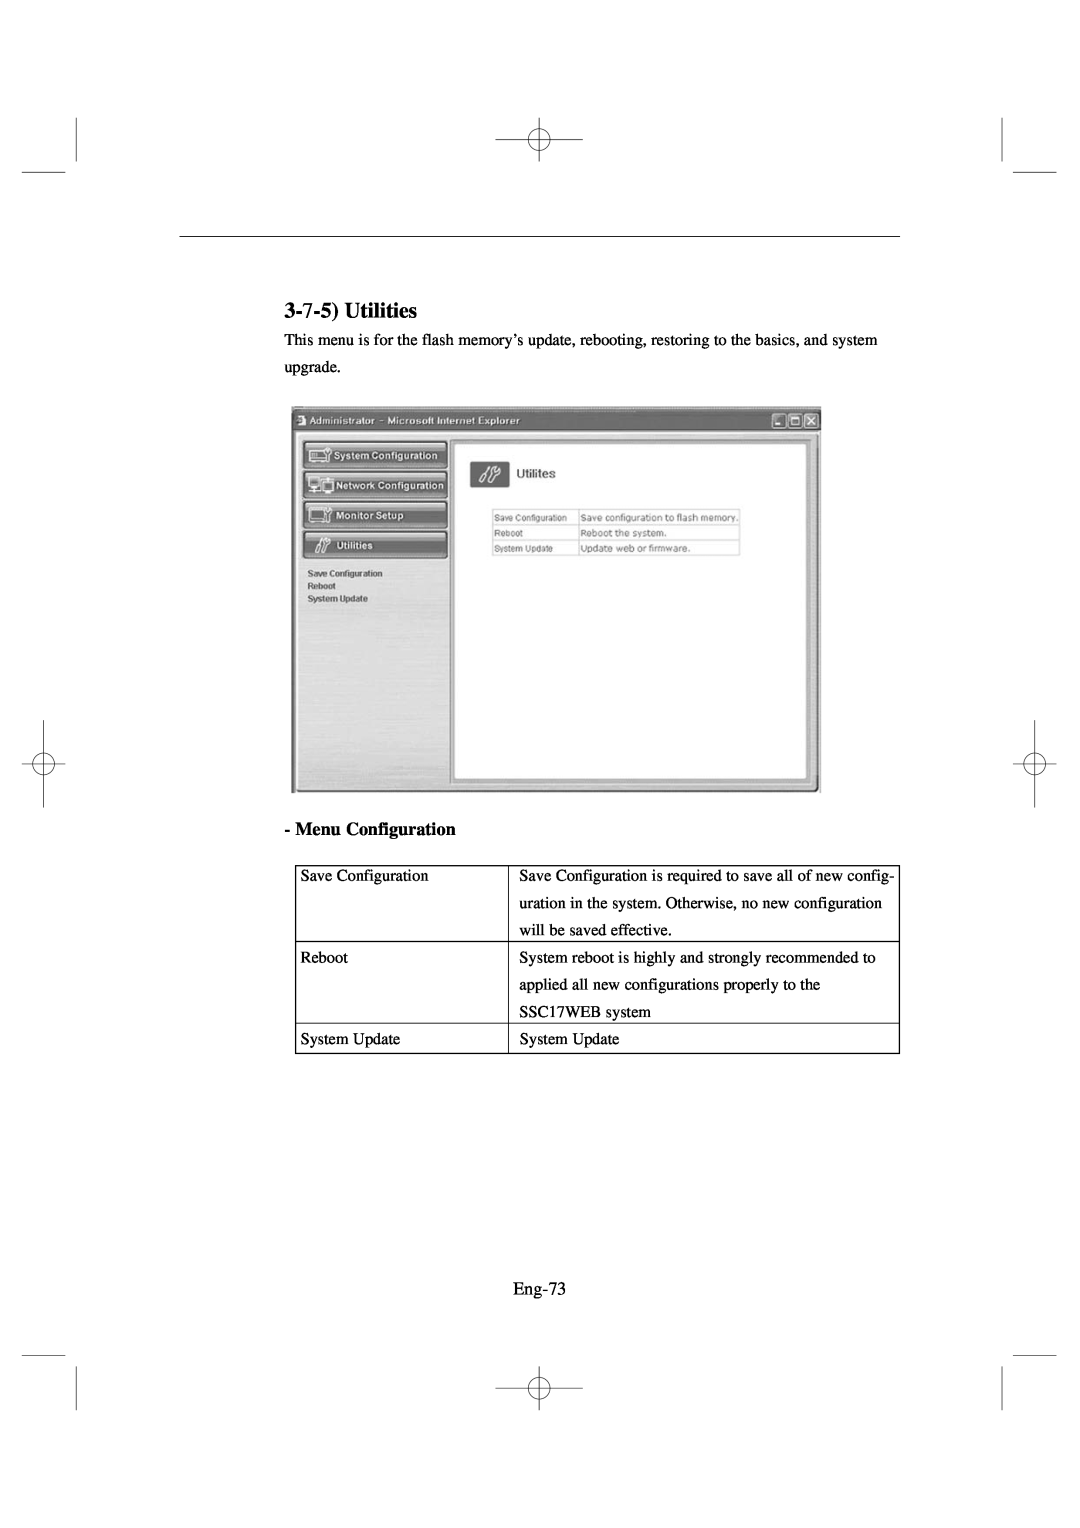 Samsung SSC17WEB manual 3-7-5Utilities, Menu Configuration, Eng-73 